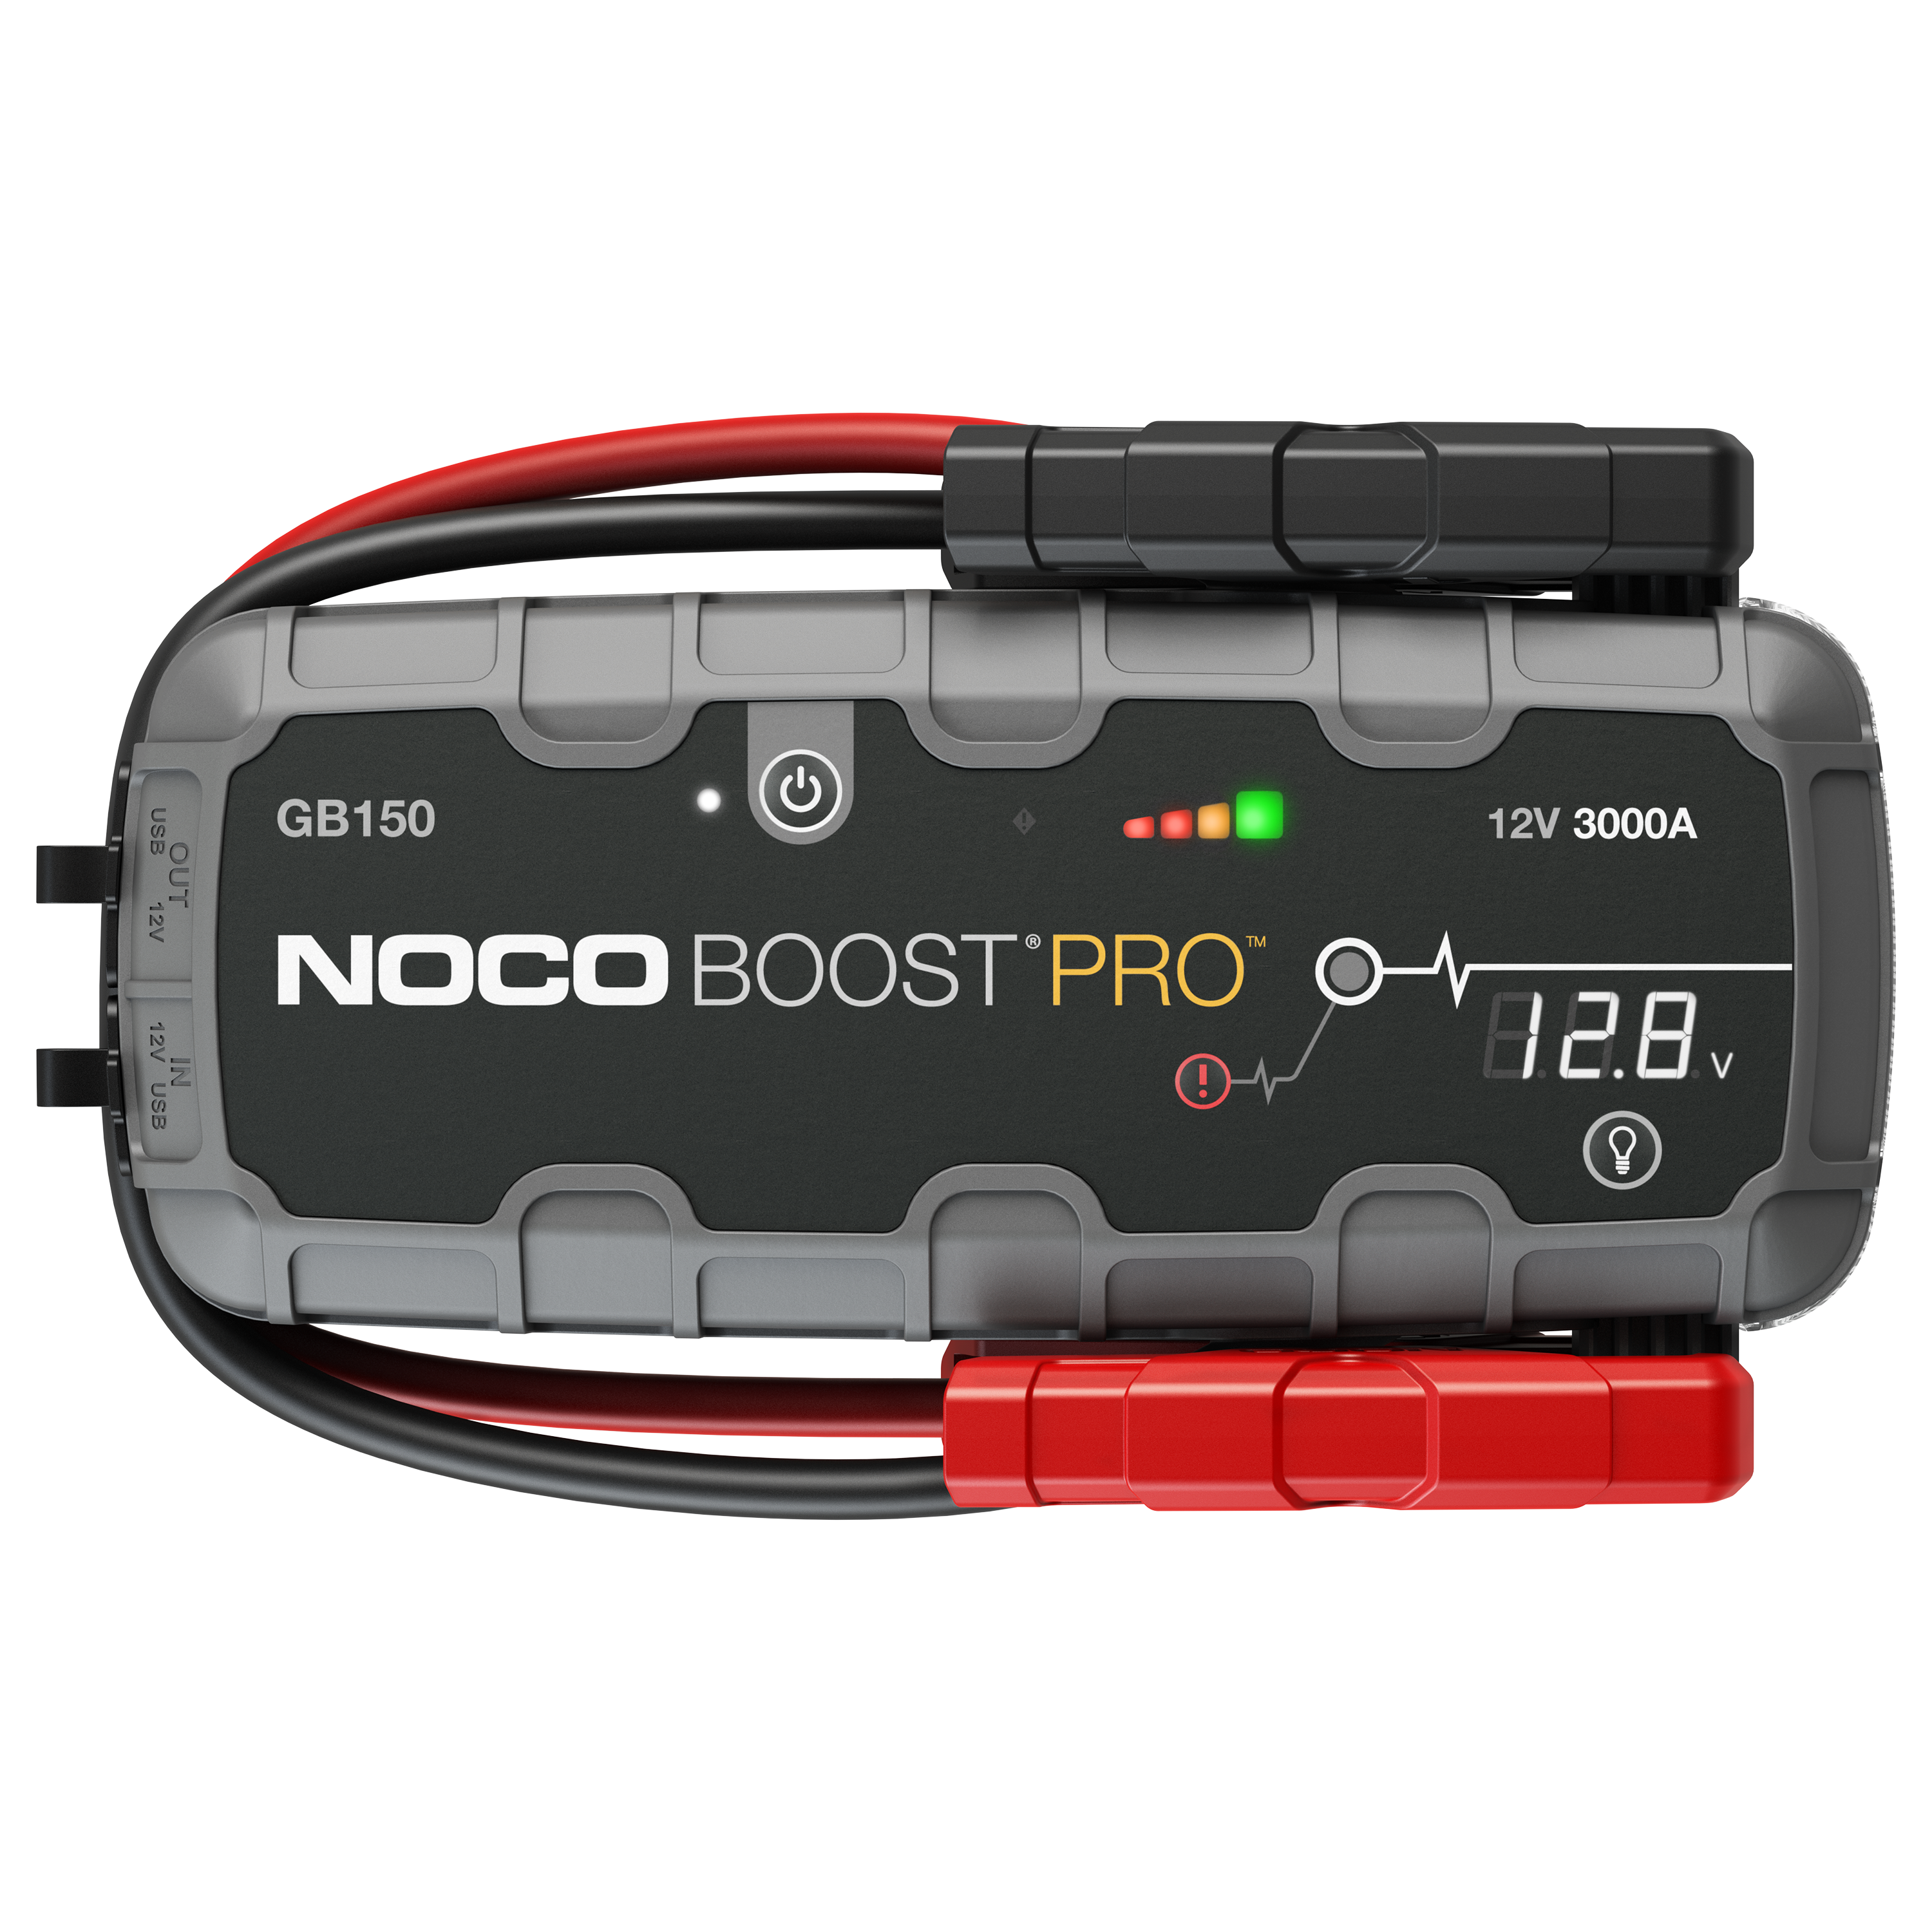 Noco Boost Pro GB150 booster jumpstarter starthulp powerbank